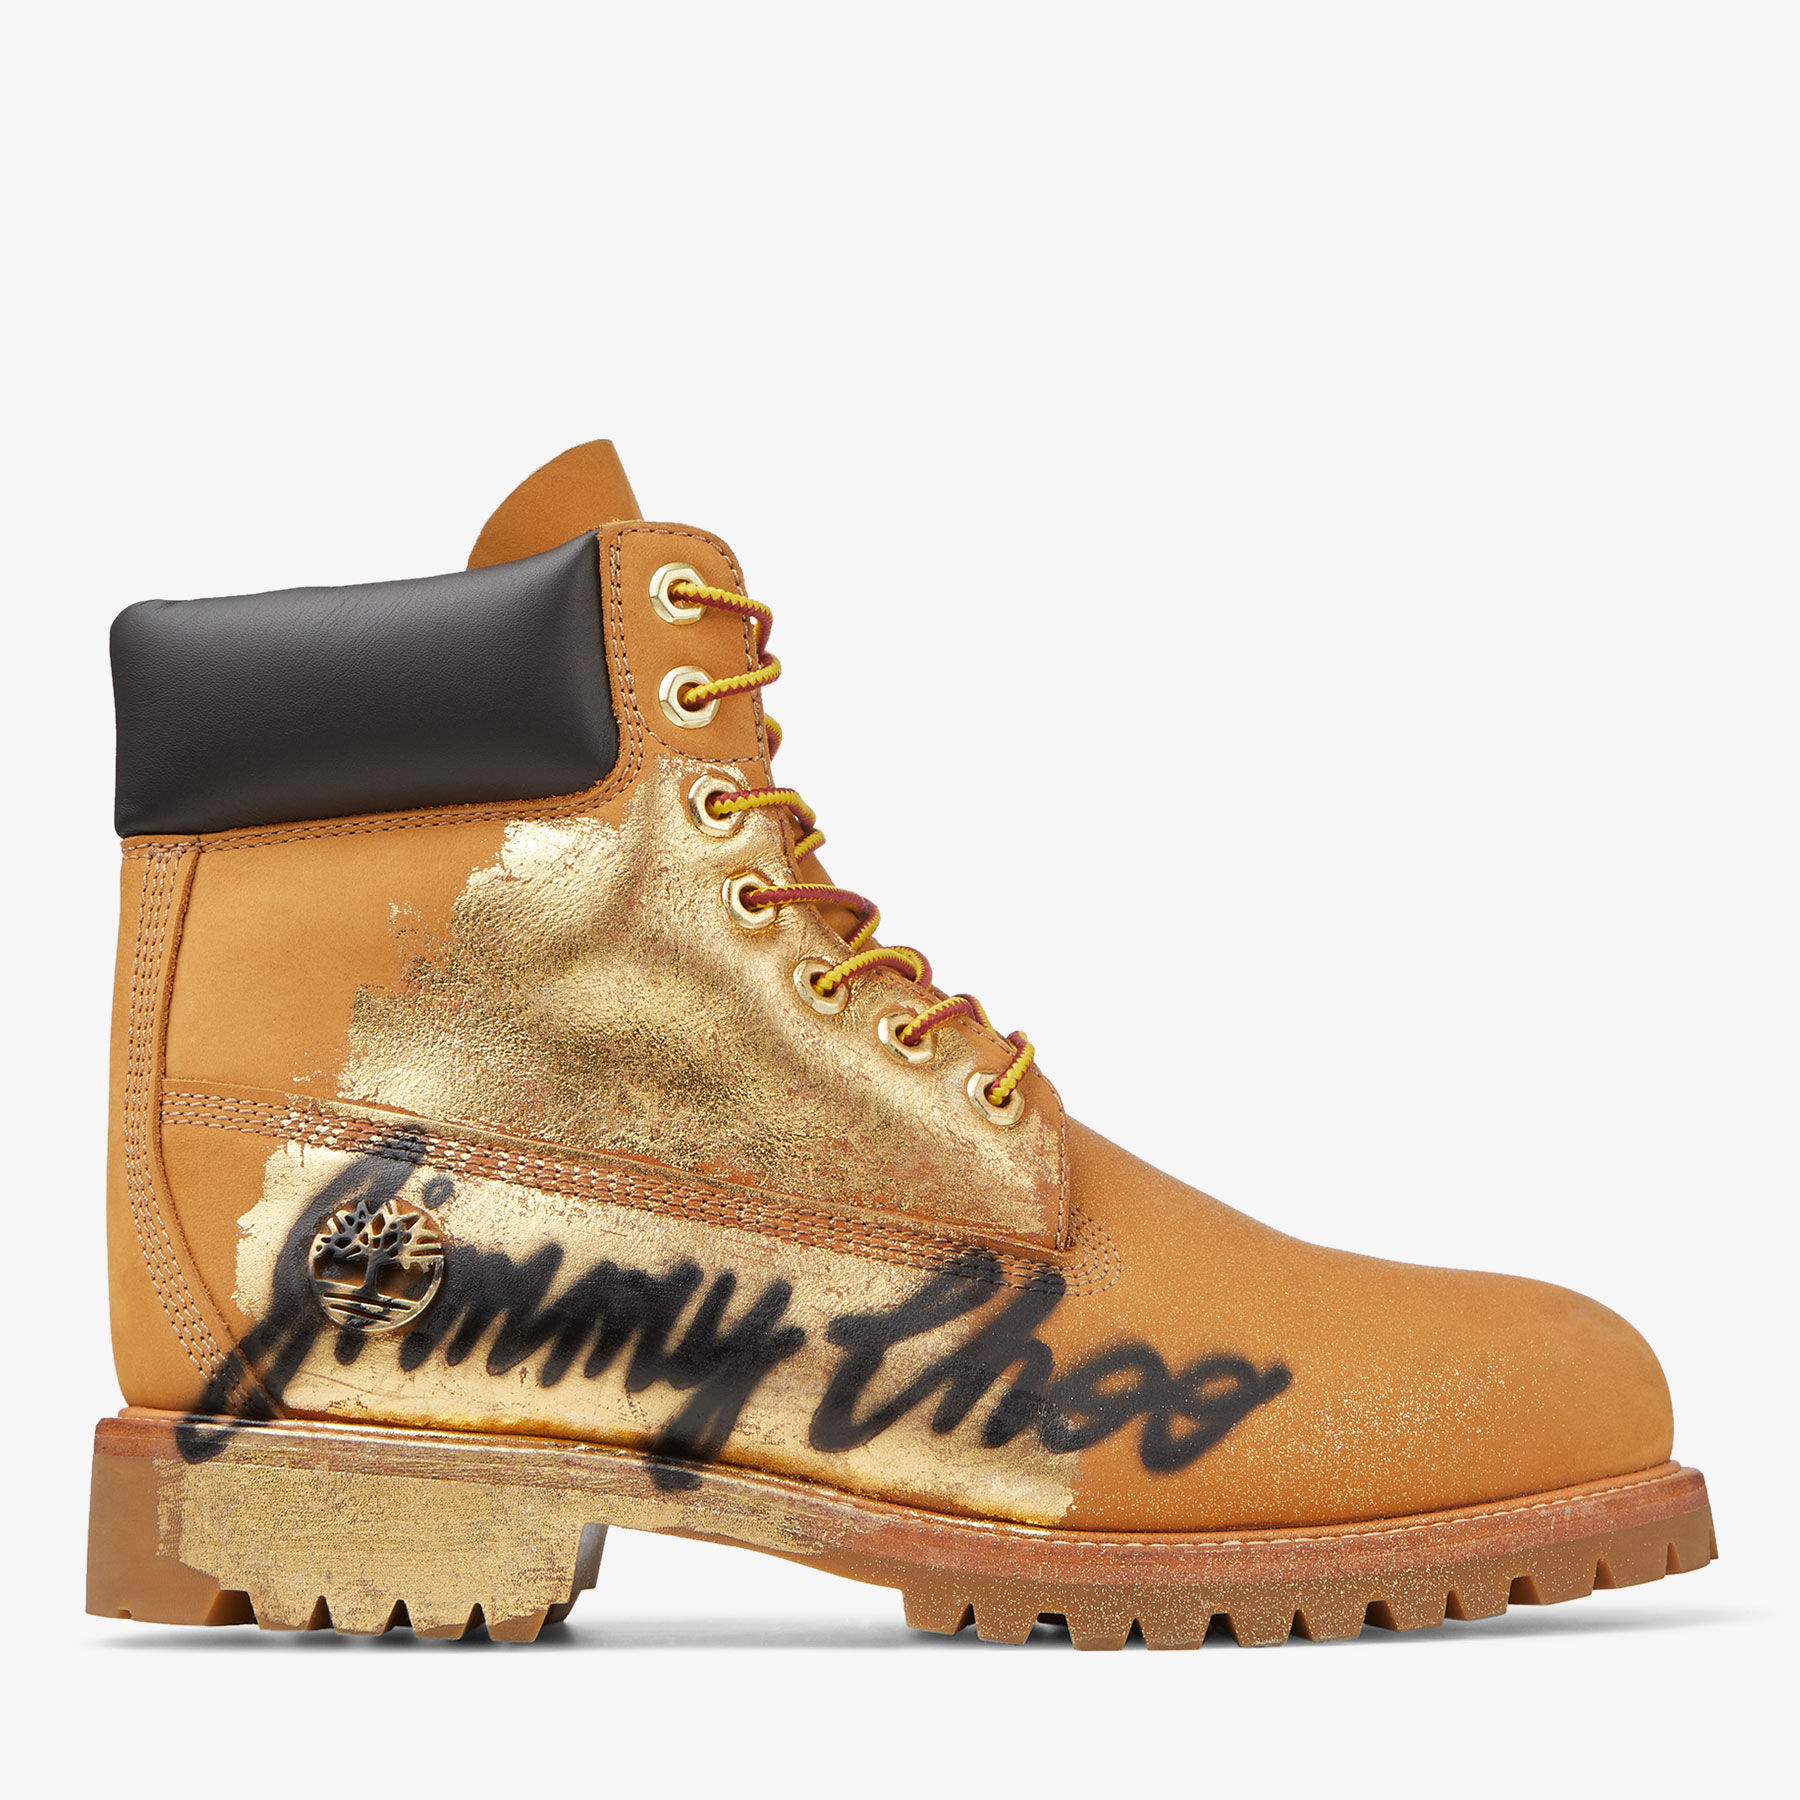 goud beu Misbruik Wheat Timberland Nubuck Ankle Boots with Jimmy Choo Graffiti | JIMMY CHOO  US X TIMBERLAND 6 INCH GRAFFITI BOOT | JIMMY CHOO US x Timberland  Collection | JIMMY CHOO US